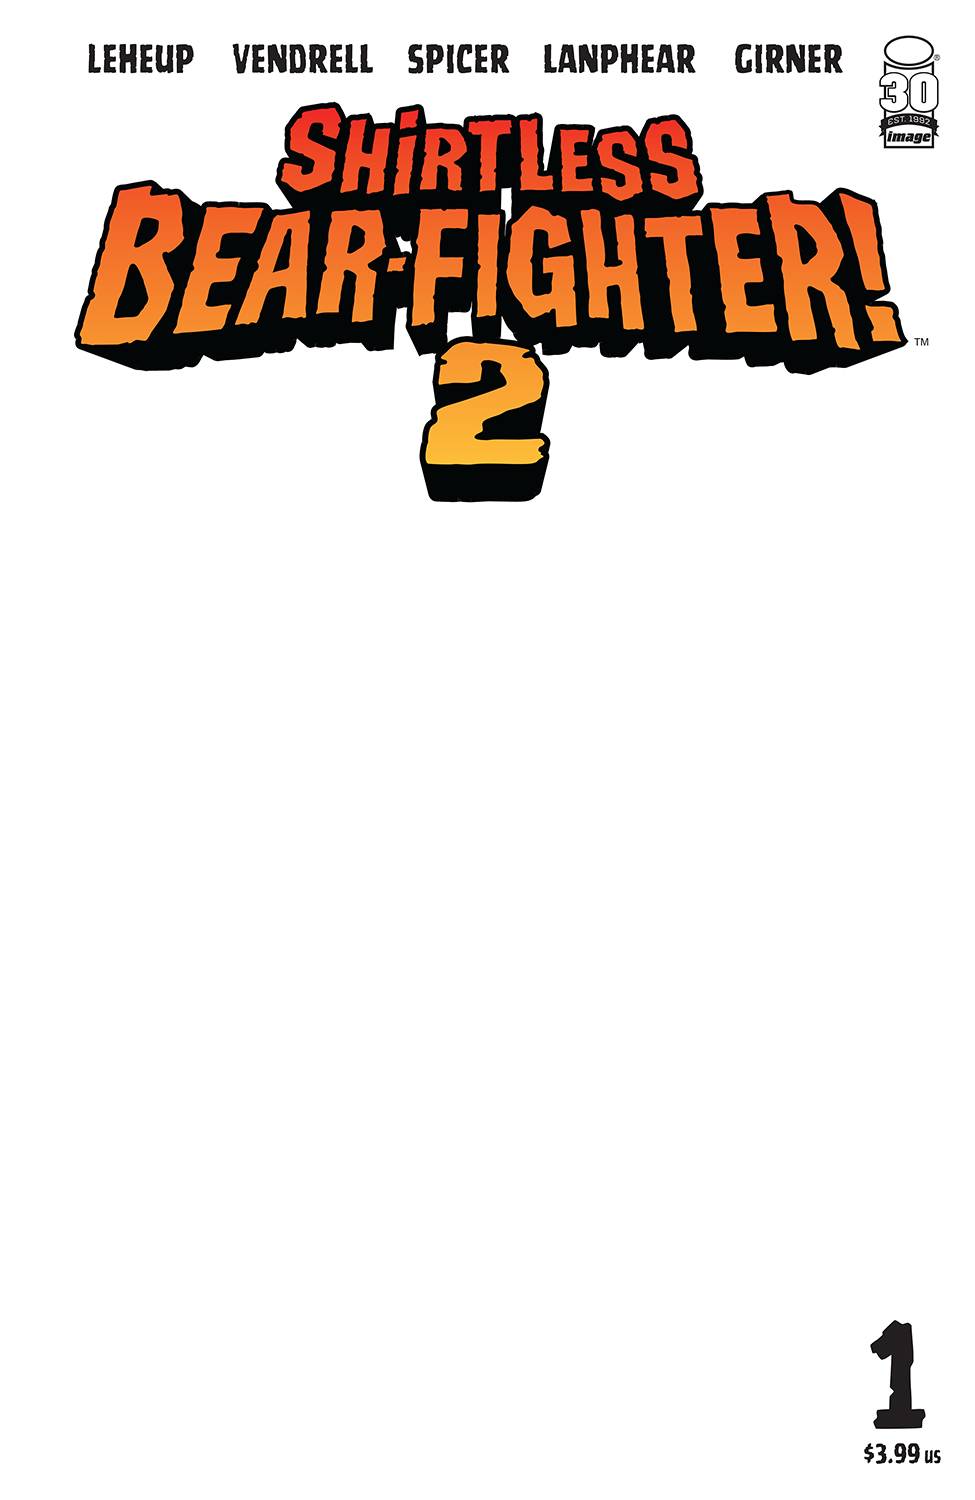 SHIRTLESS BEAR-FIGHTER 2 #1 (OF 7) CVR C BLANK SKETCH CVR